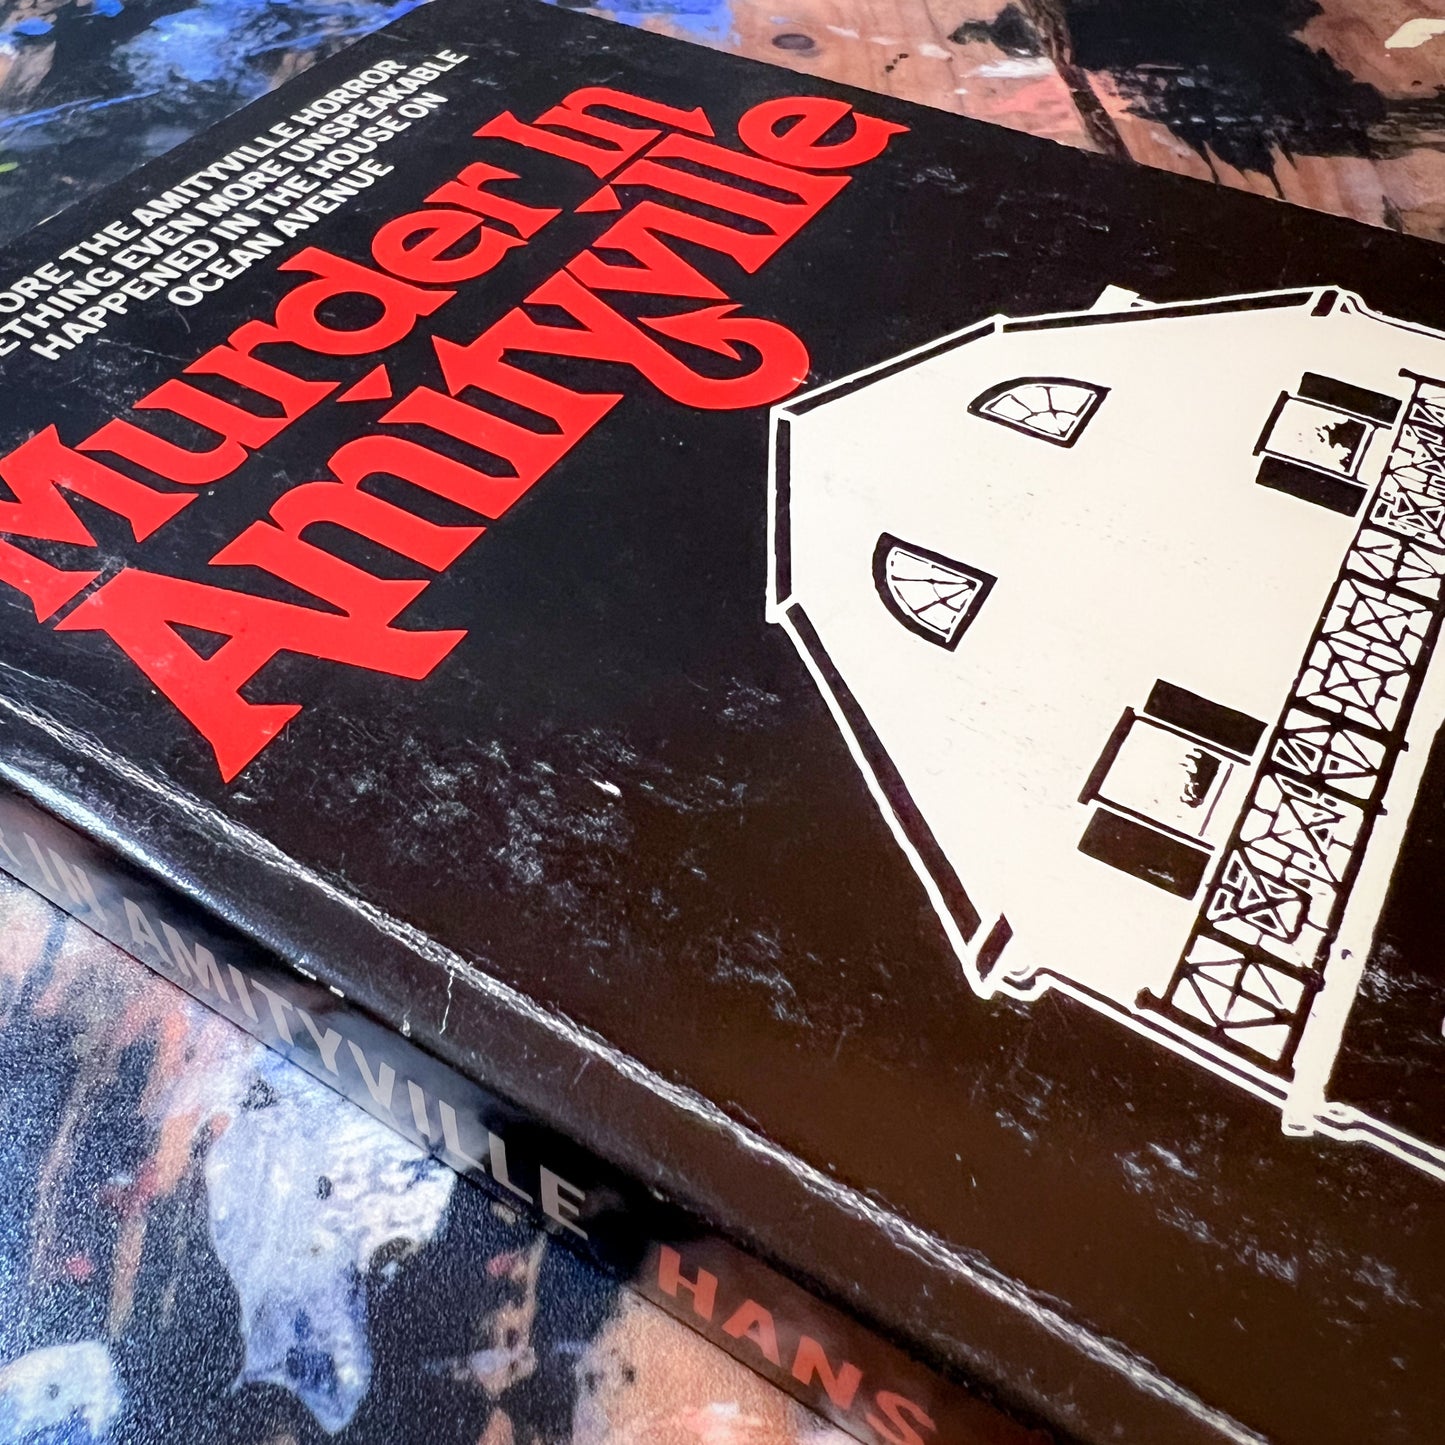 Murder in Amityville by Hans Holzer - 1983 Vintage Paperback Book